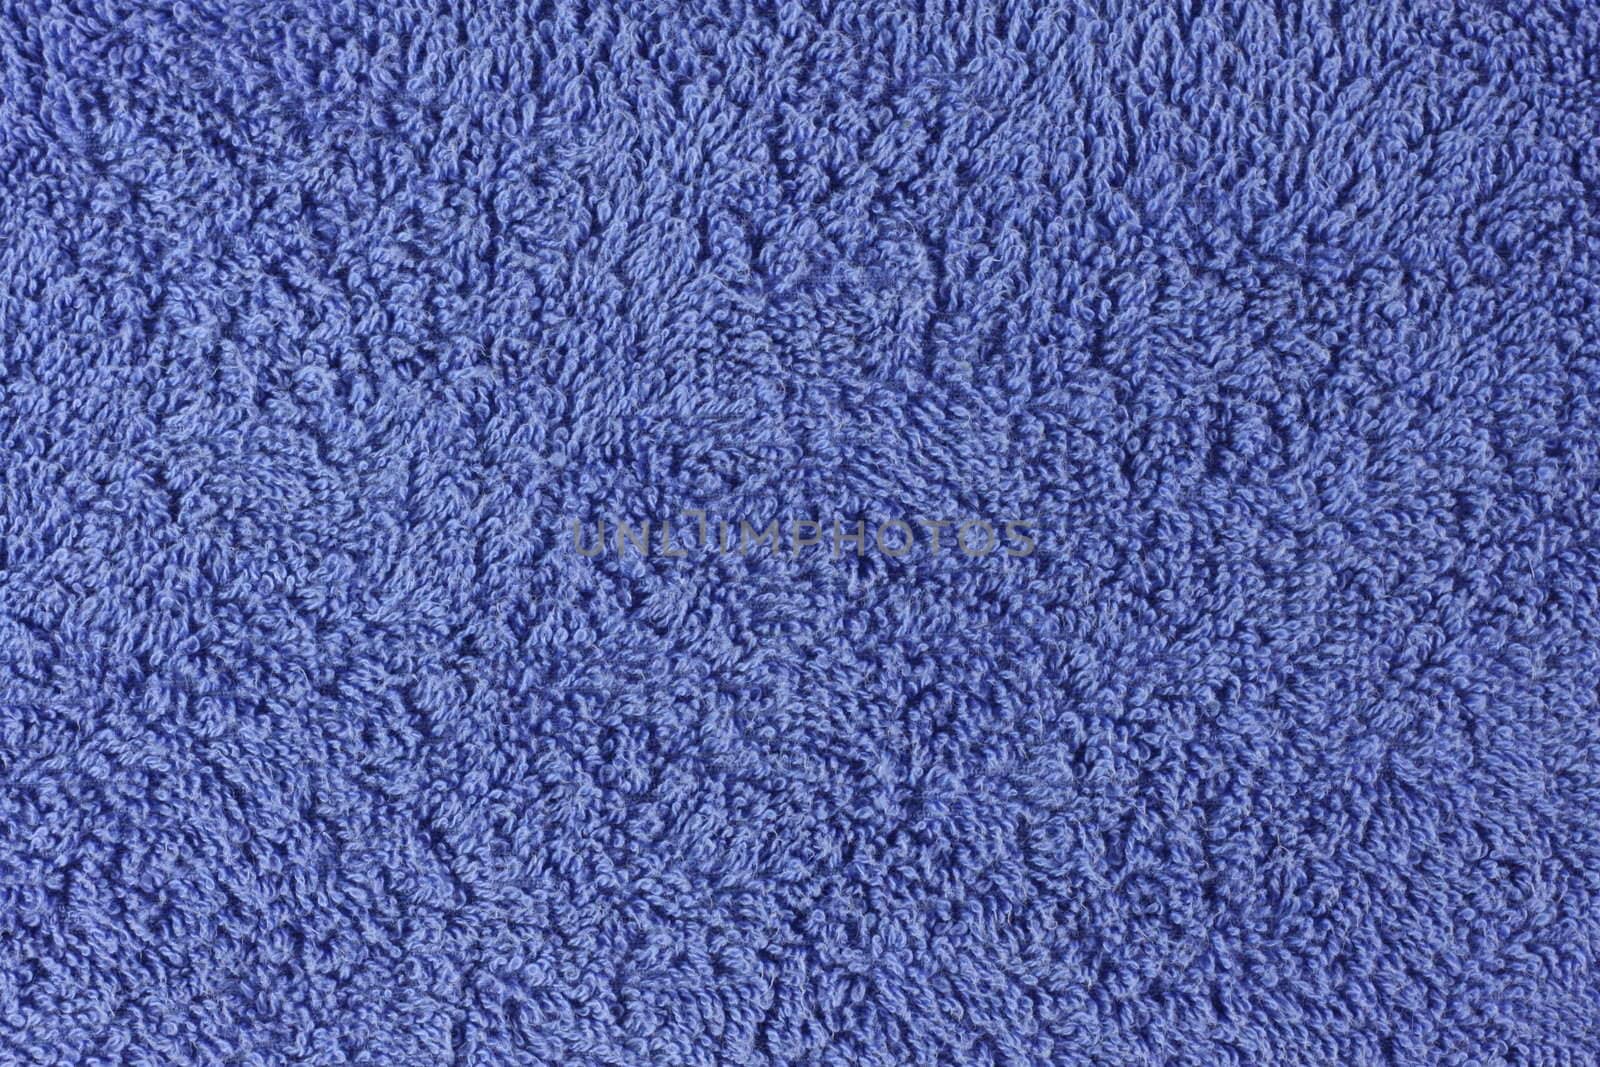 Slighty worn purple towel texture